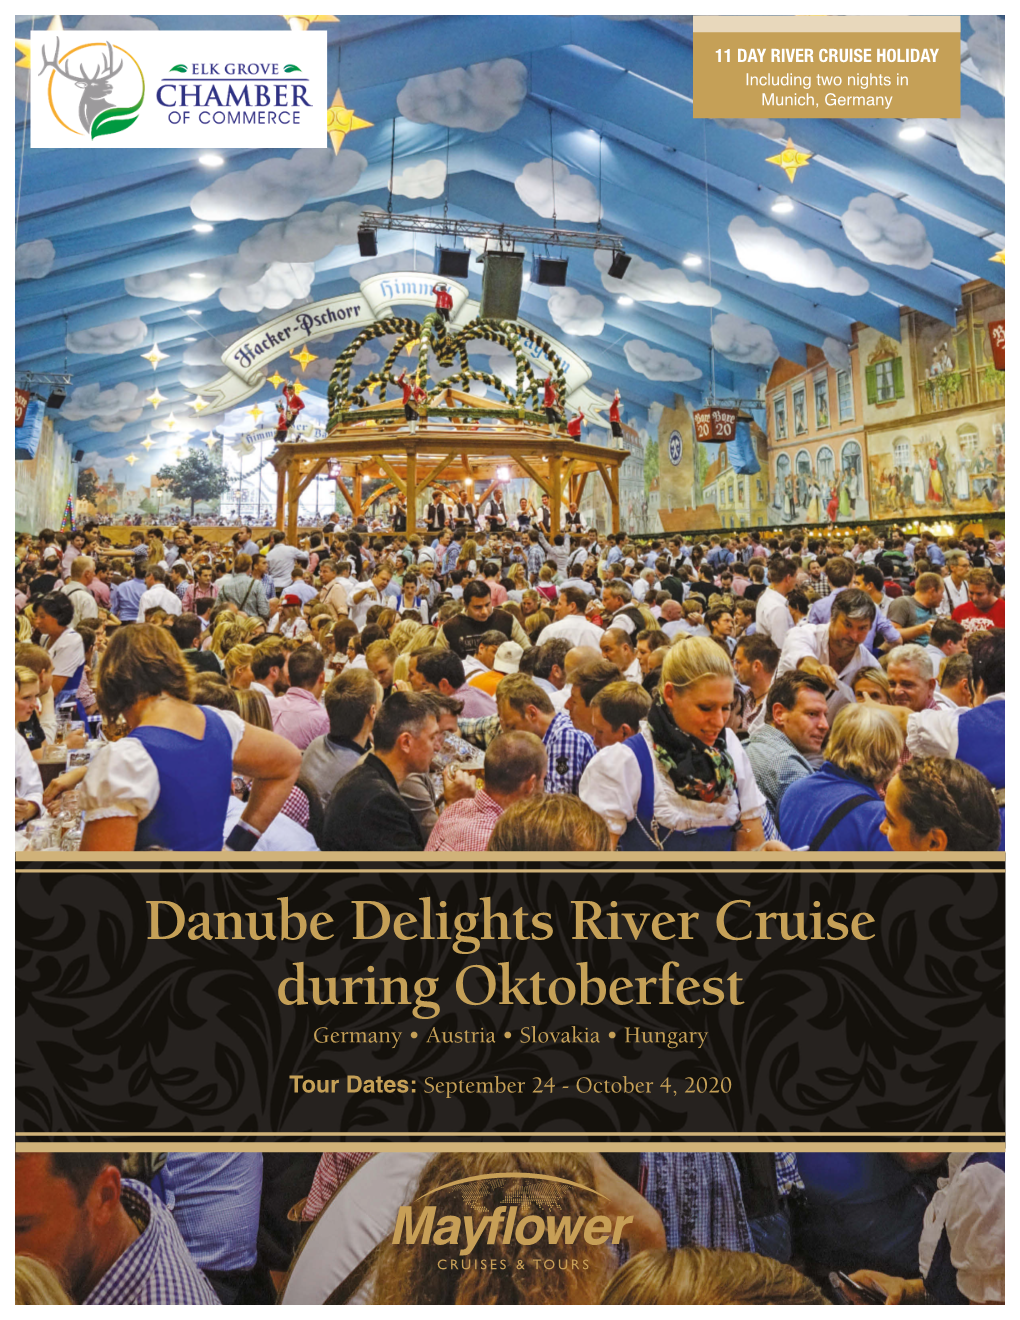 Danube Delights River Cruise During Oktoberfest Germany • Austria • Slovakia • Hungary